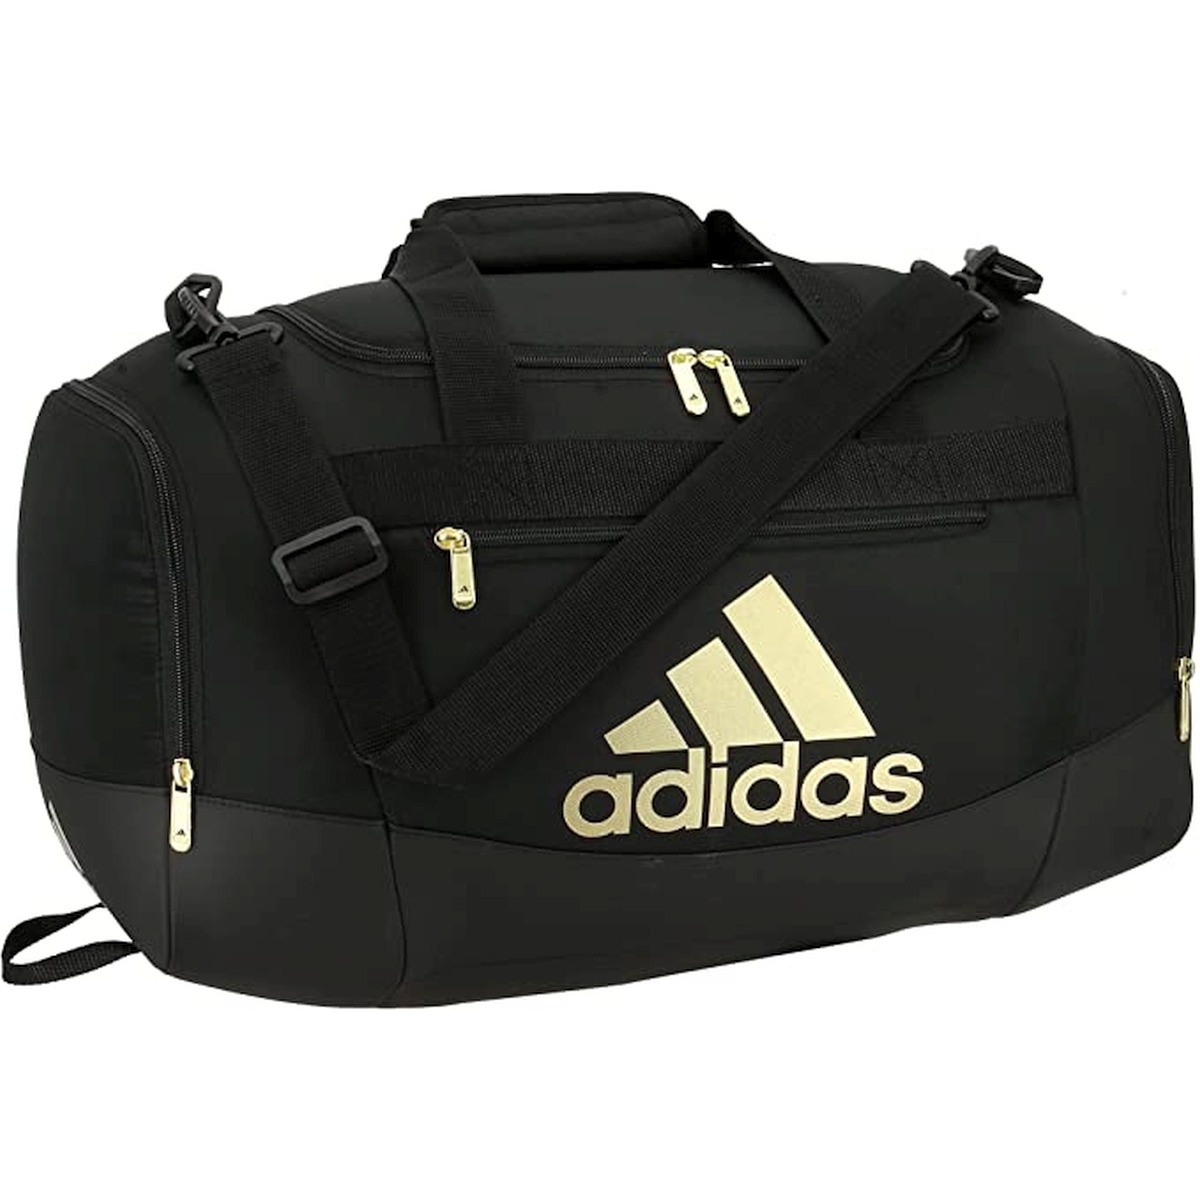 Adidas Defender IV Small Duffel Bag (Black/Gold Metallic)